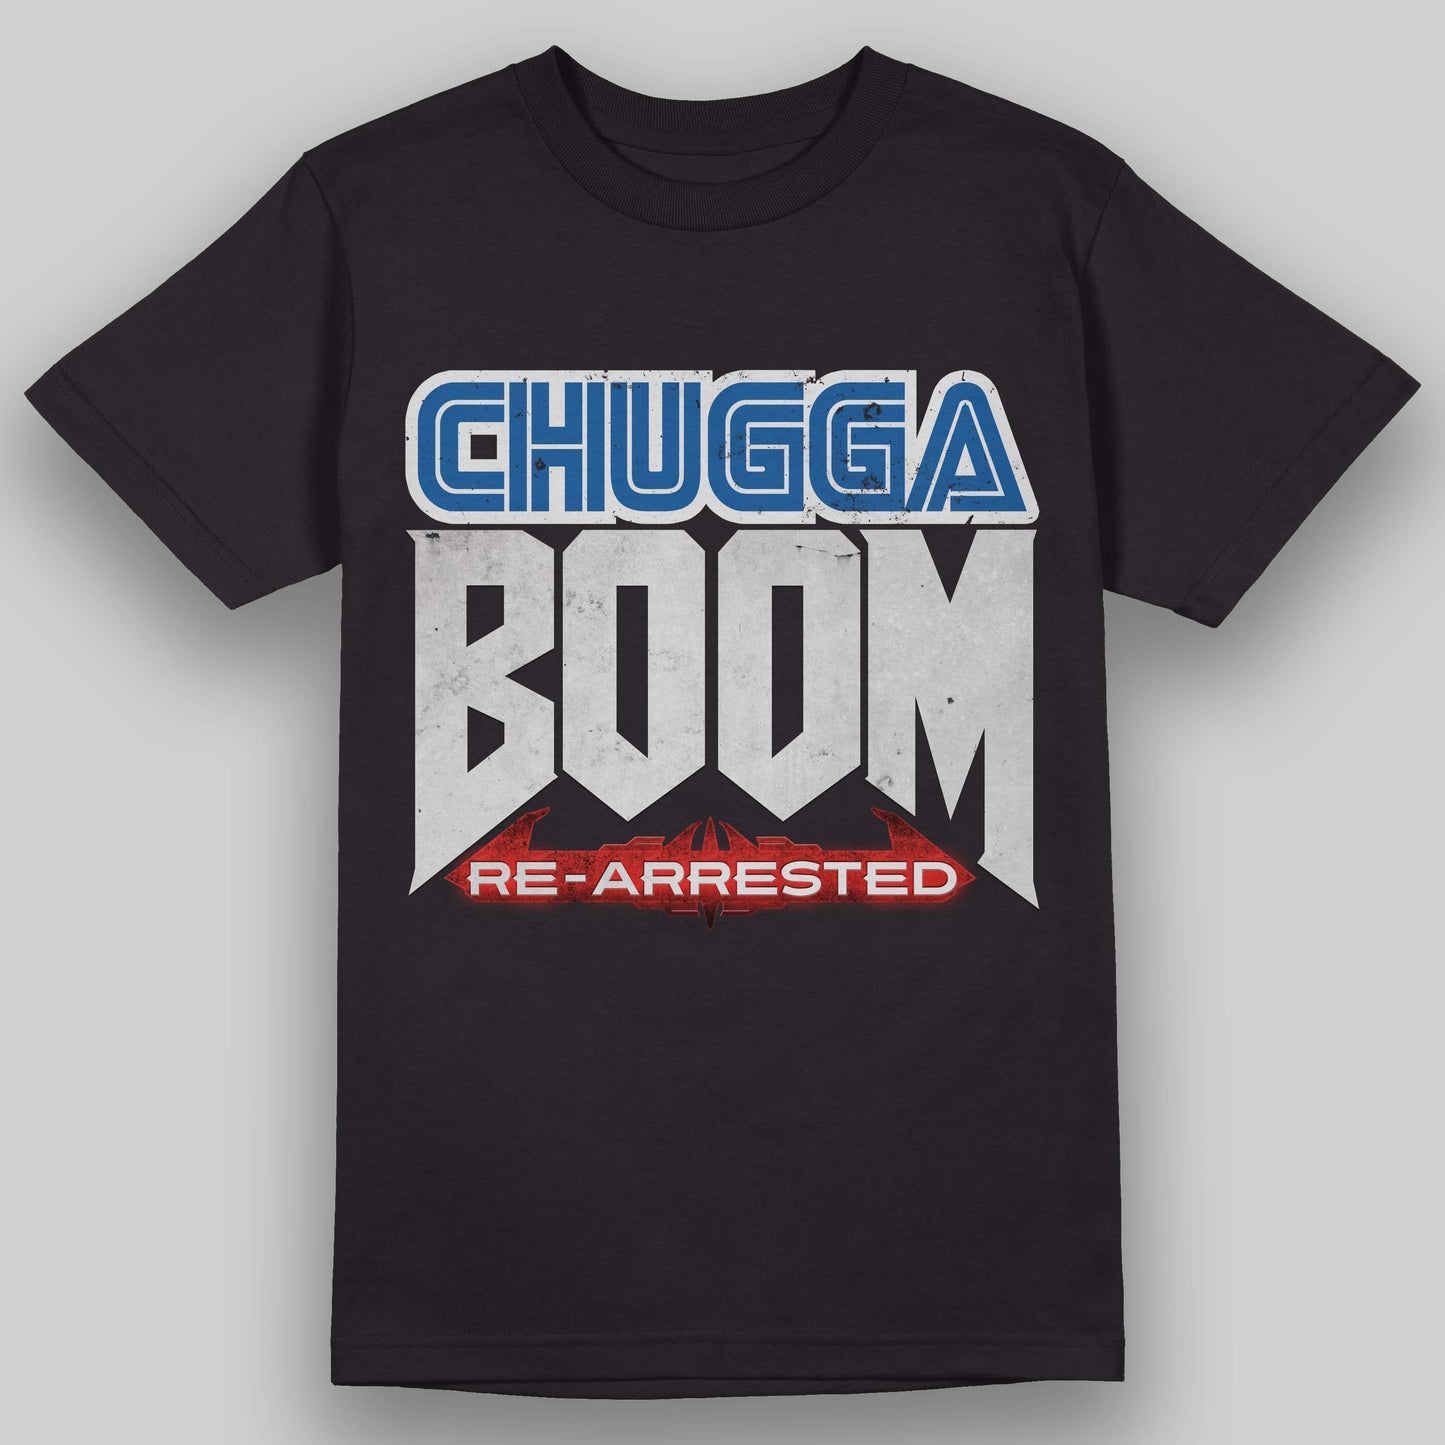 "ChuggaDoom Re-Arrested" T-Shirt